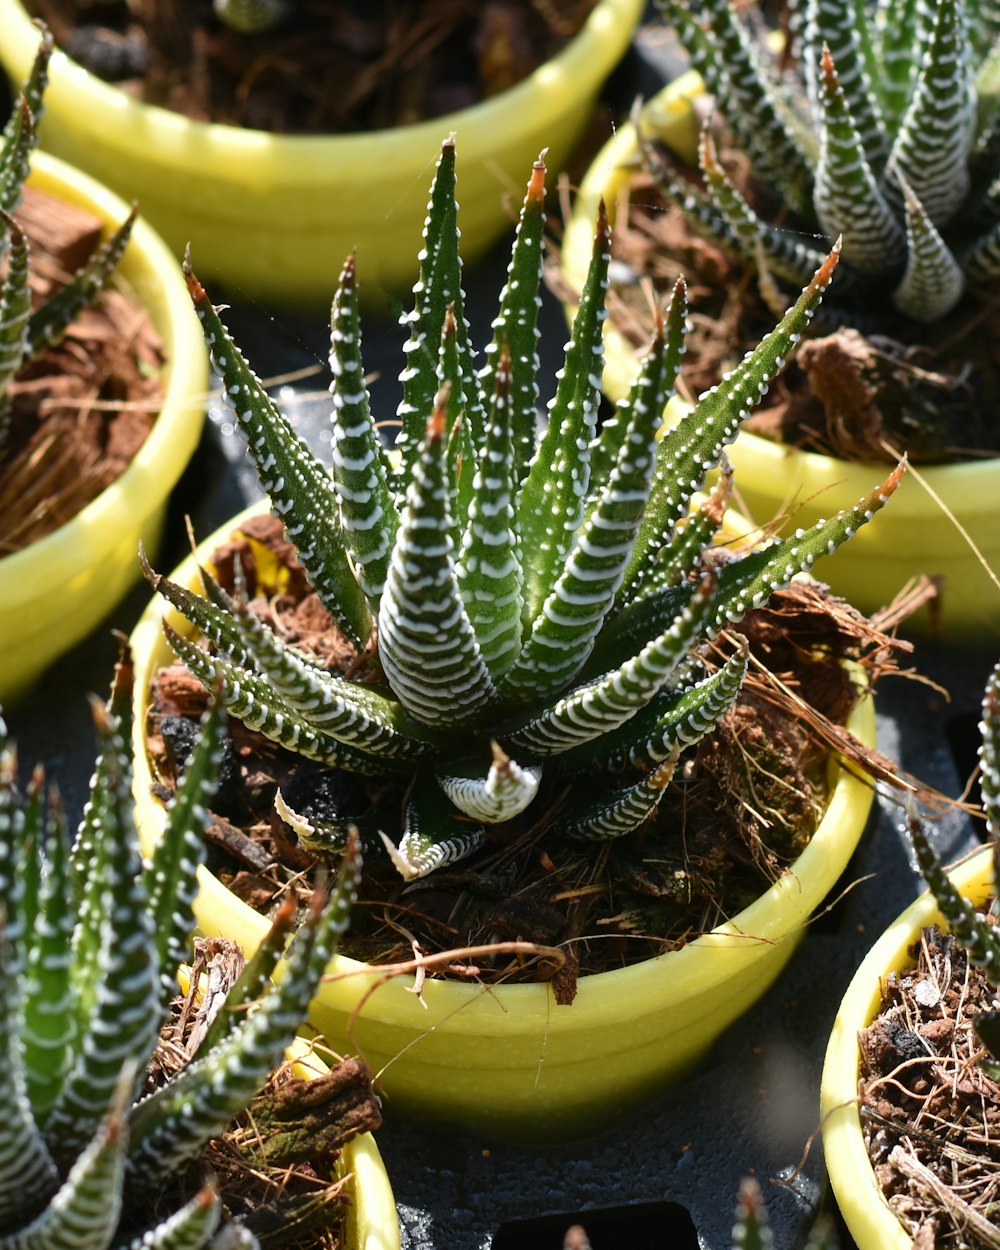 green cactus plant on yellow plastic pot